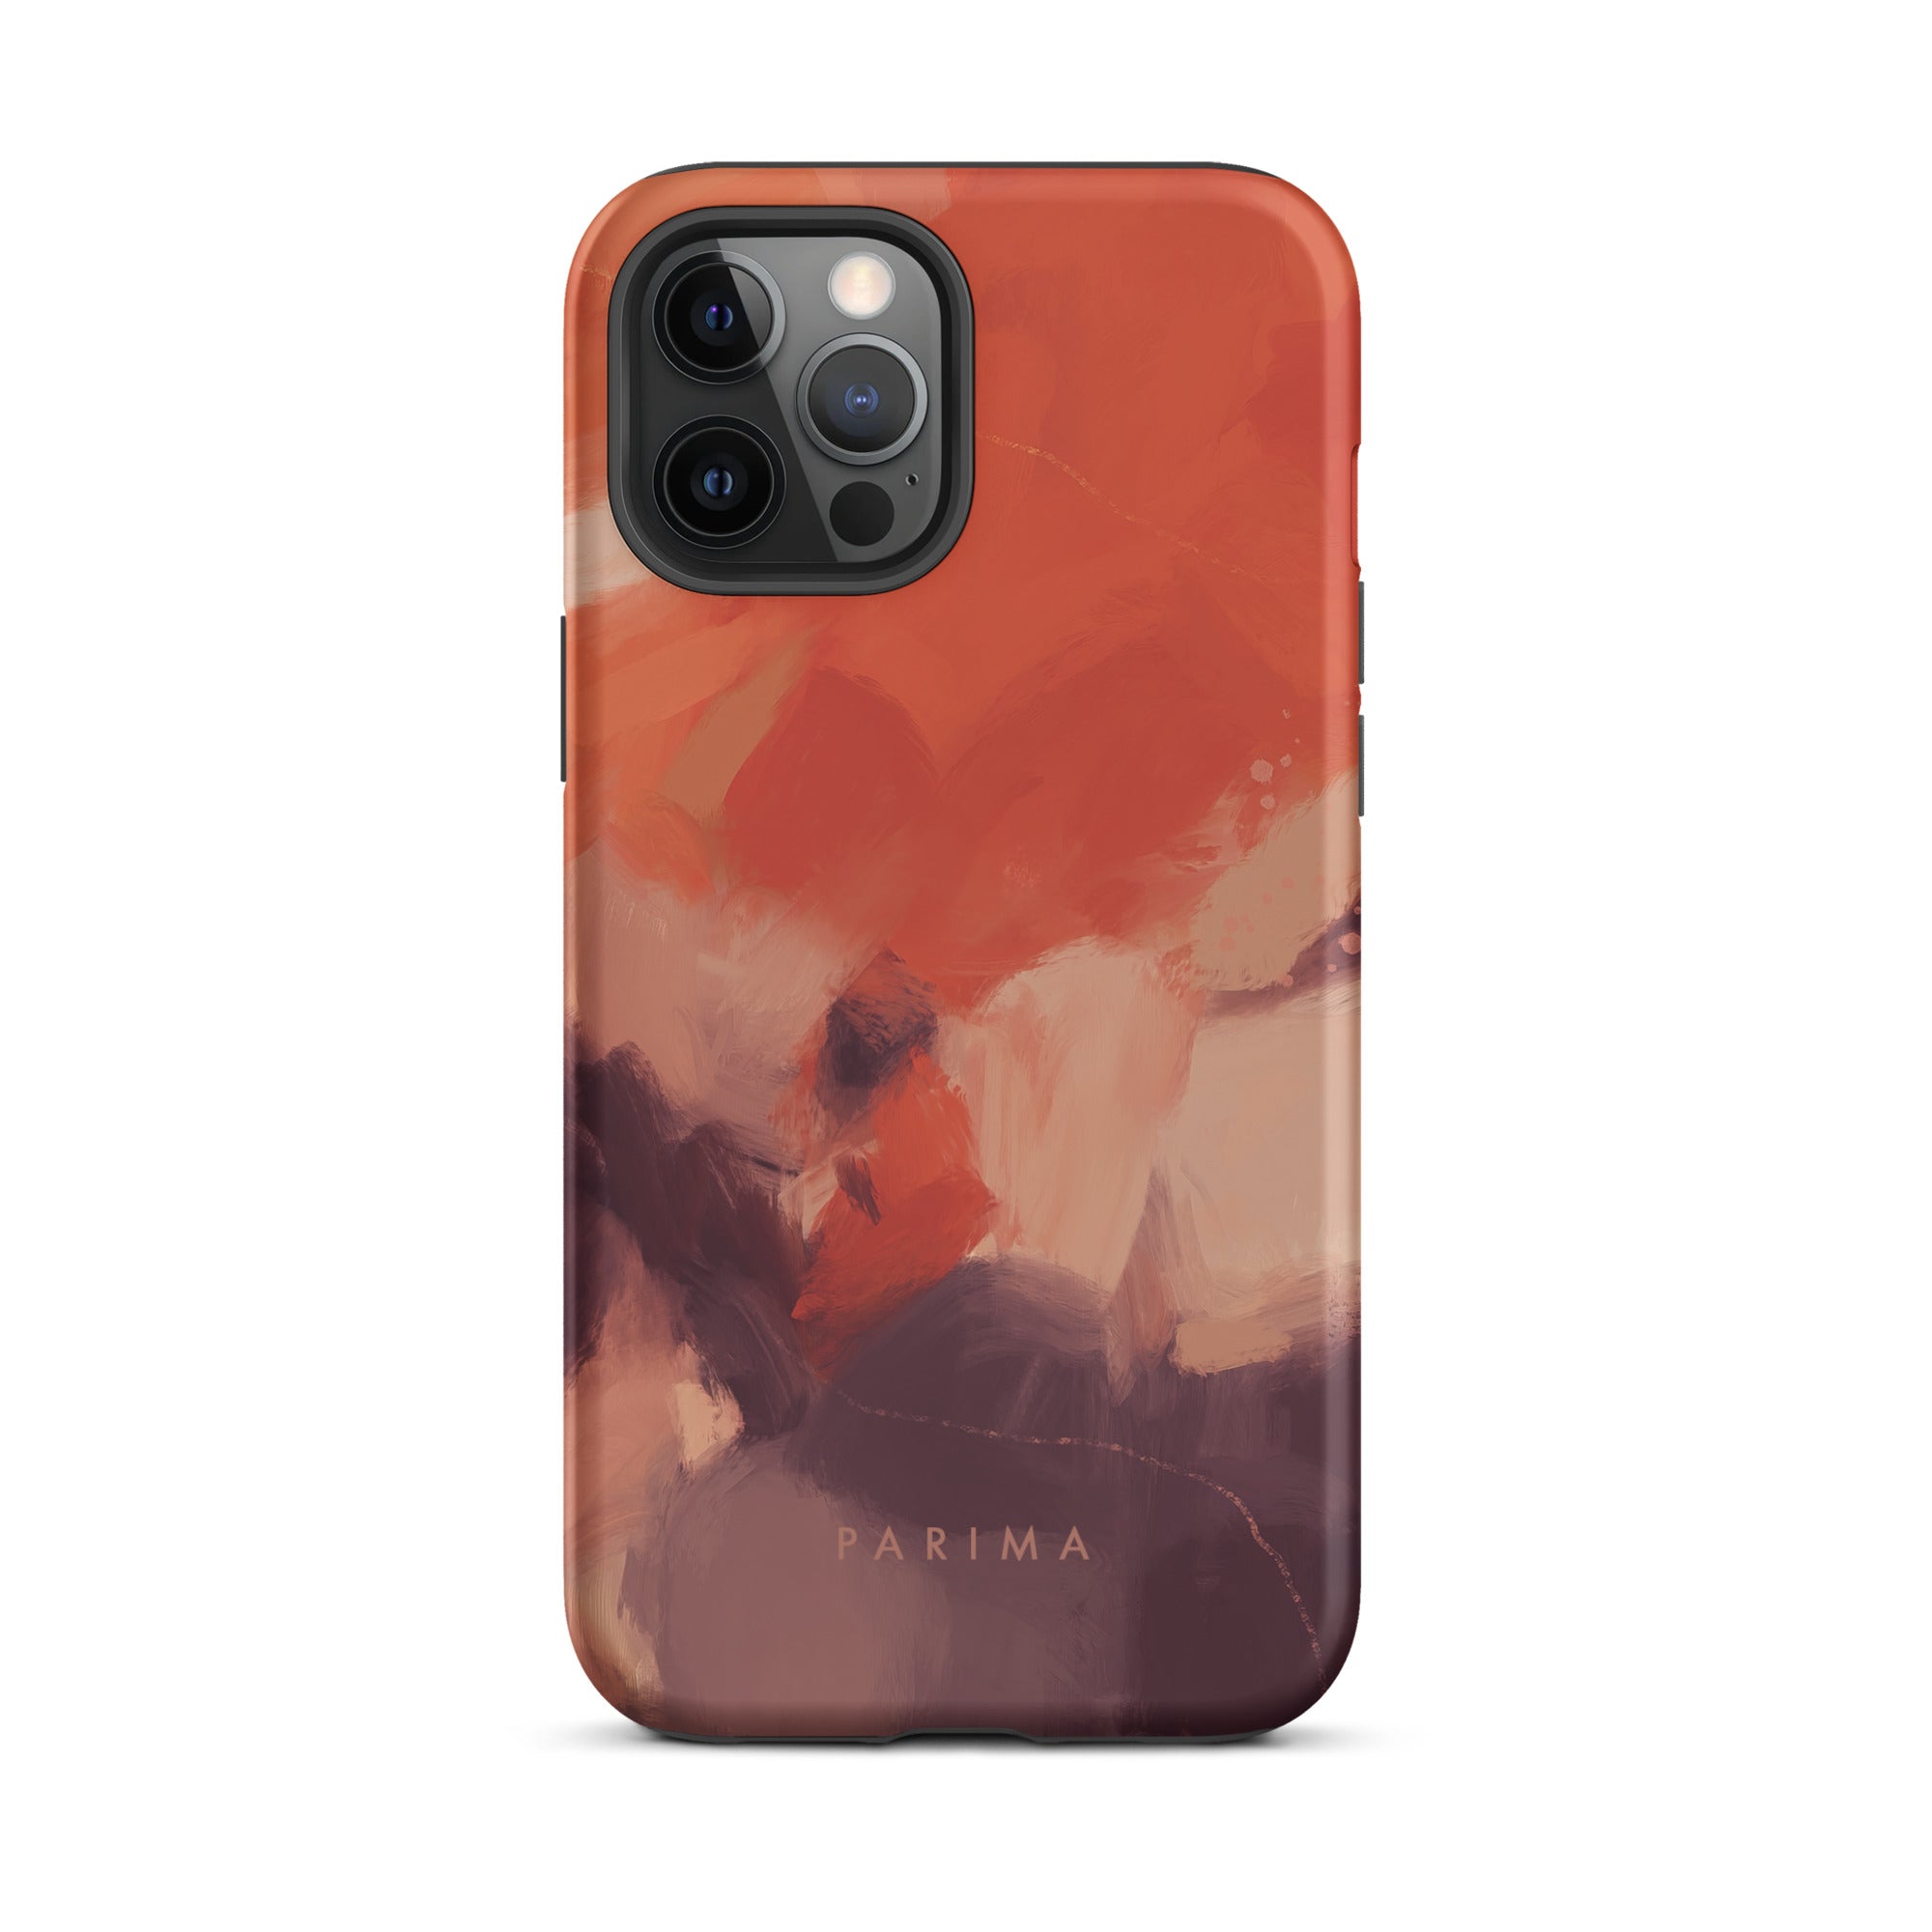 Autumn, orange and purple abstract art - iPhone 12 Pro Max tough case by Parima Studio